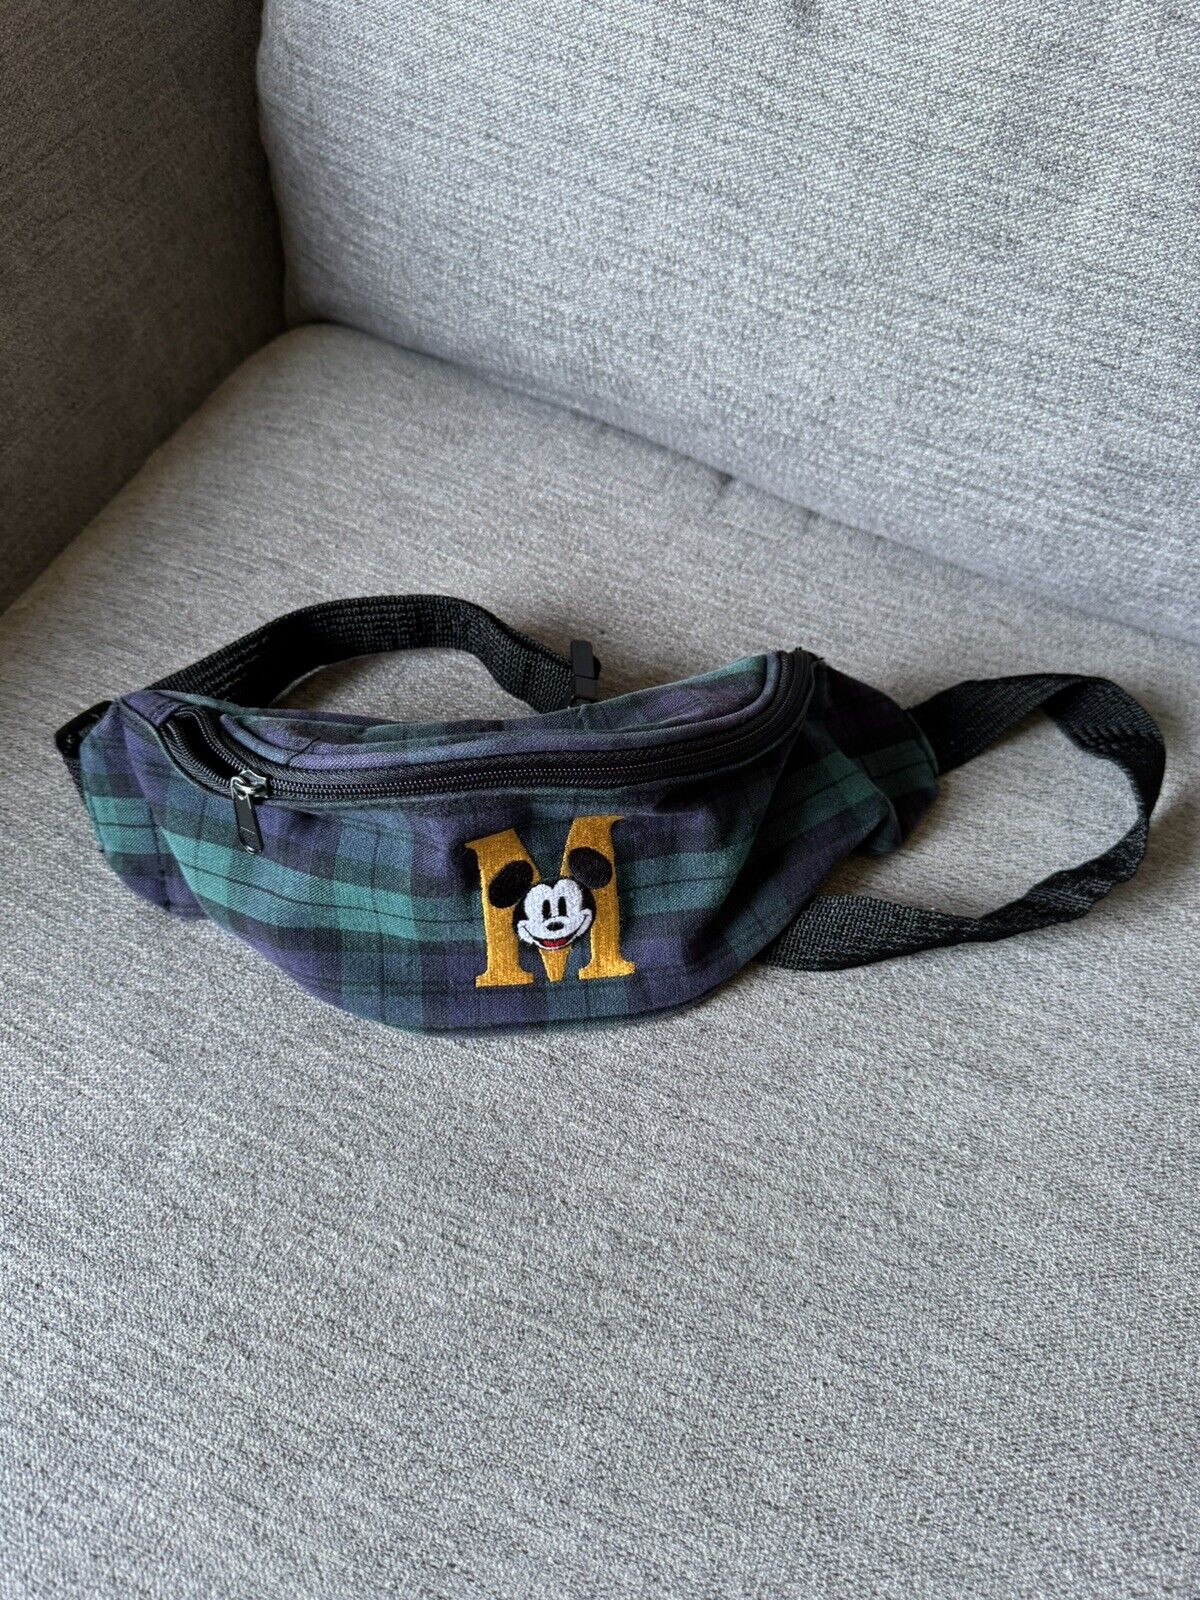 Disney Mickey Mouse crossover bag purse fanny pack Walt Disney Store Vintage